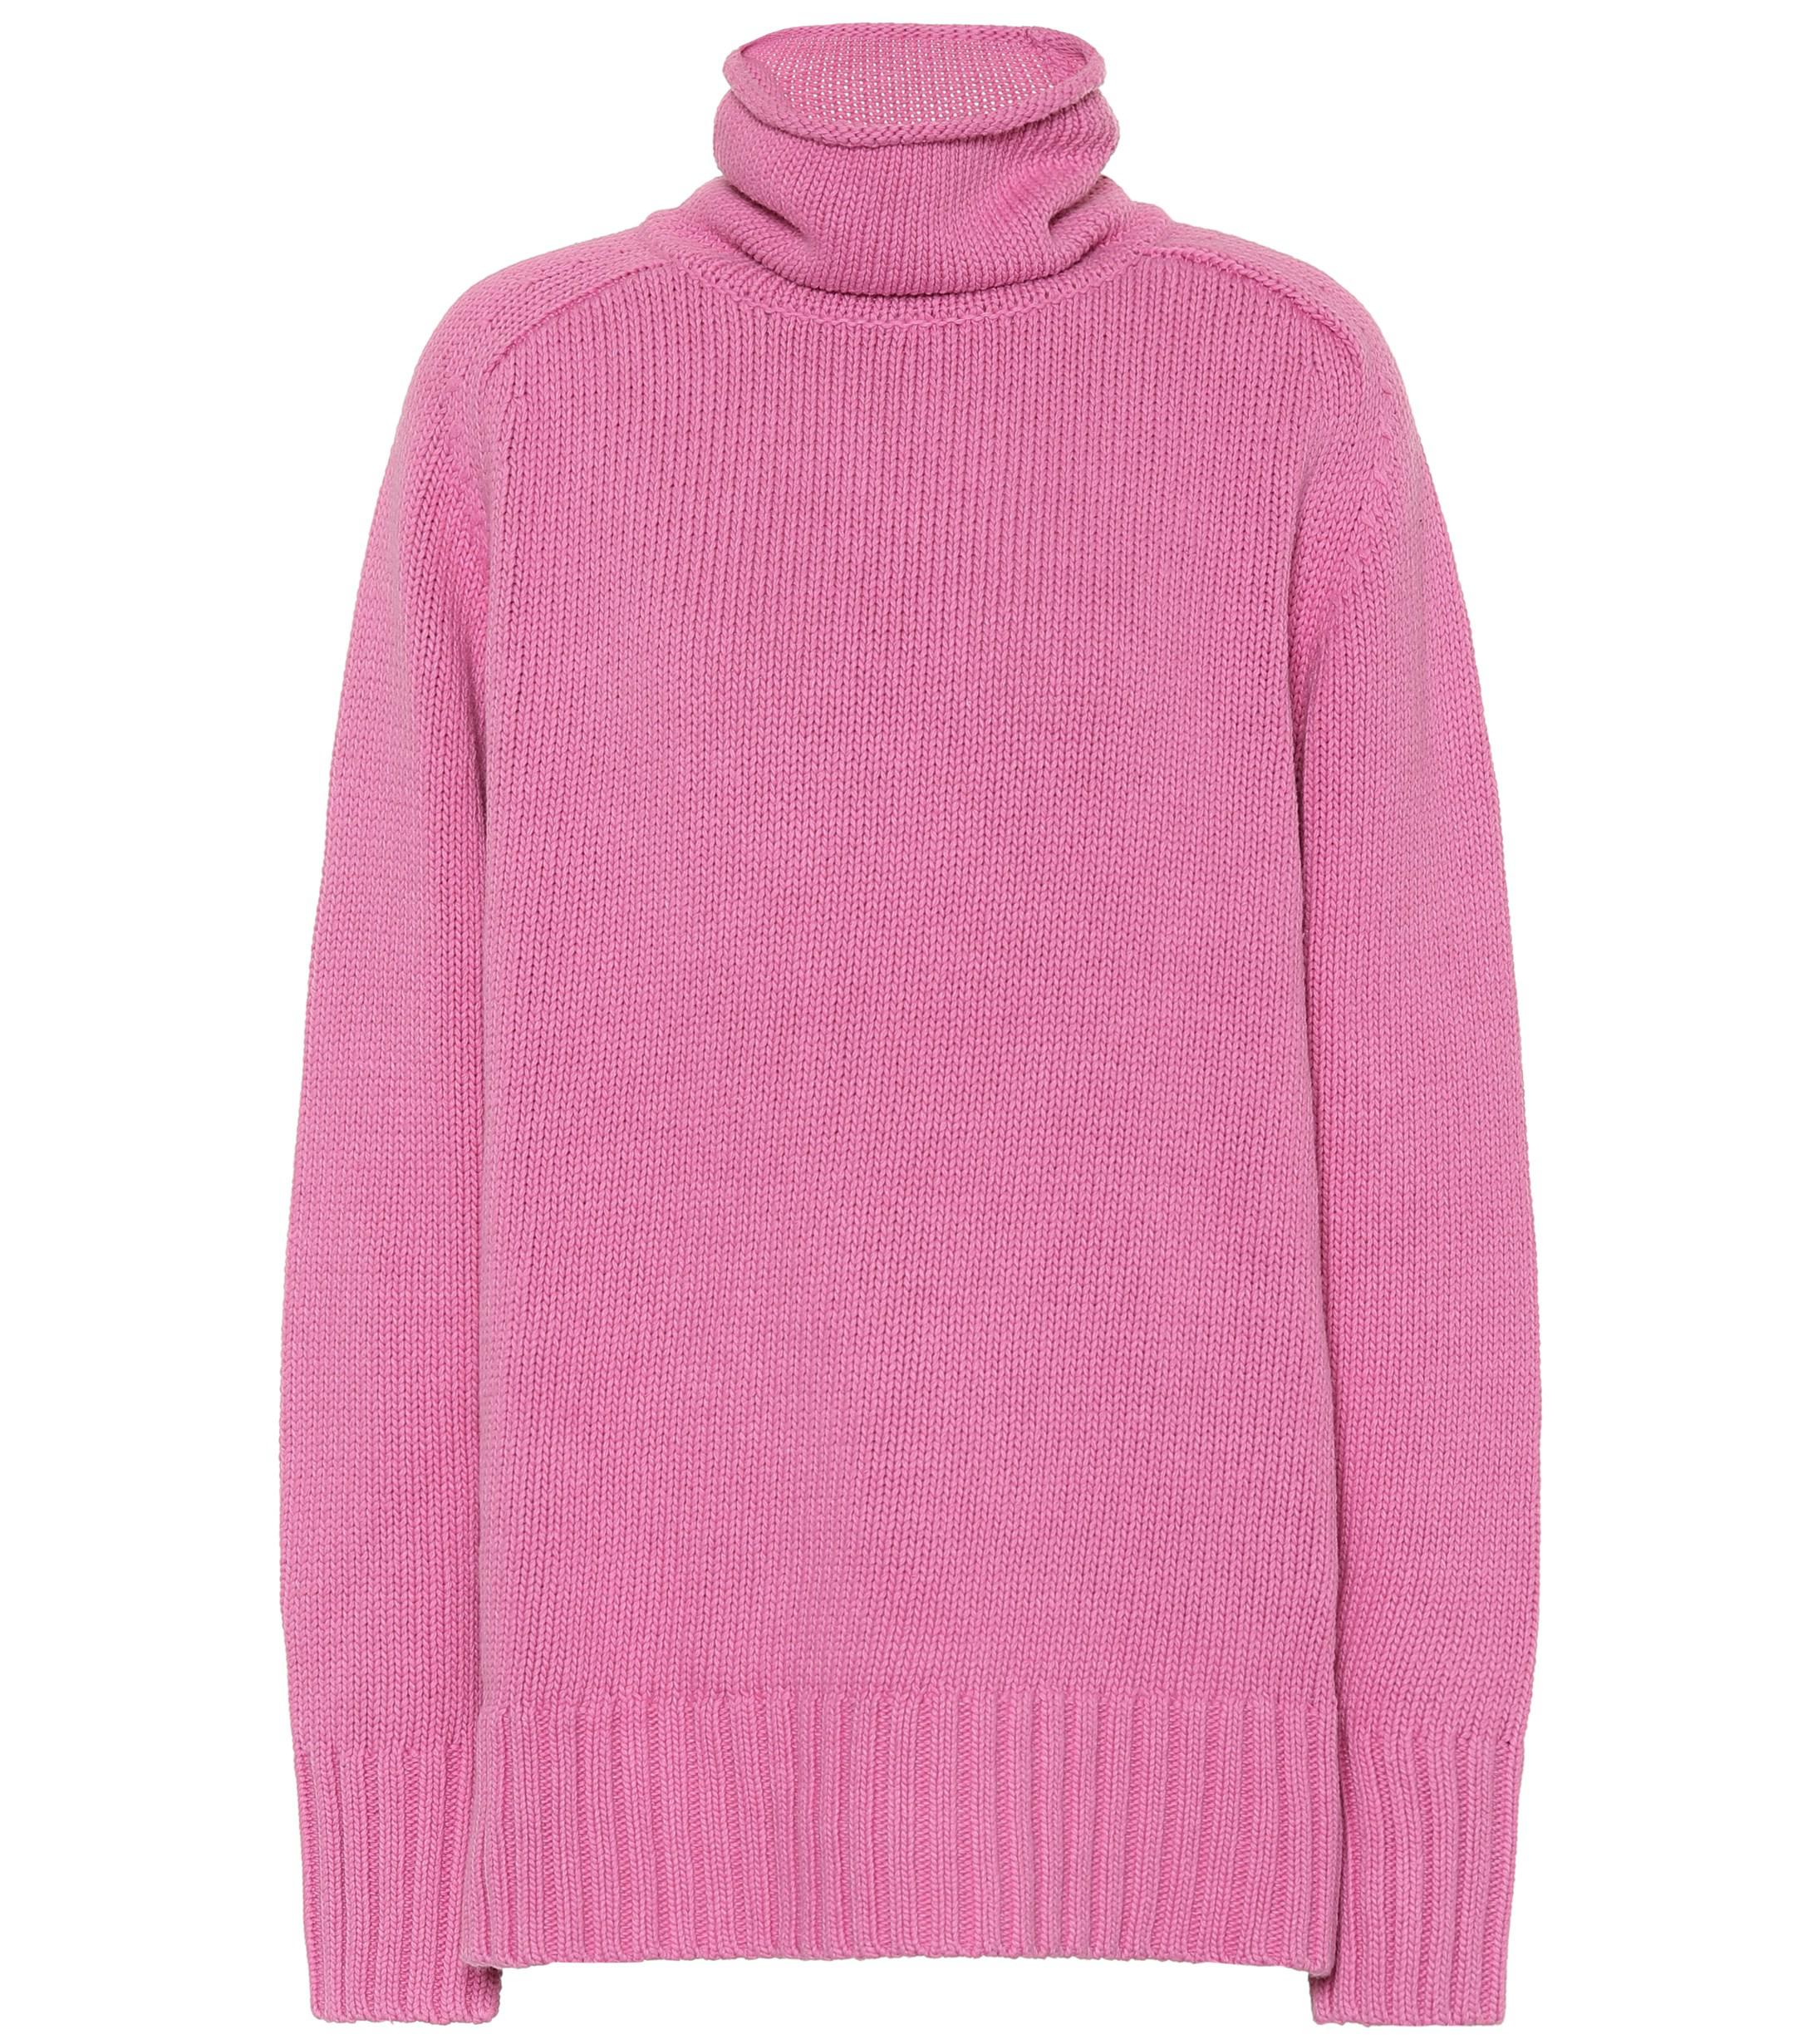 JOSEPH Cashmere Cotton-blend Turtleneck Sweater in Pink - Lyst